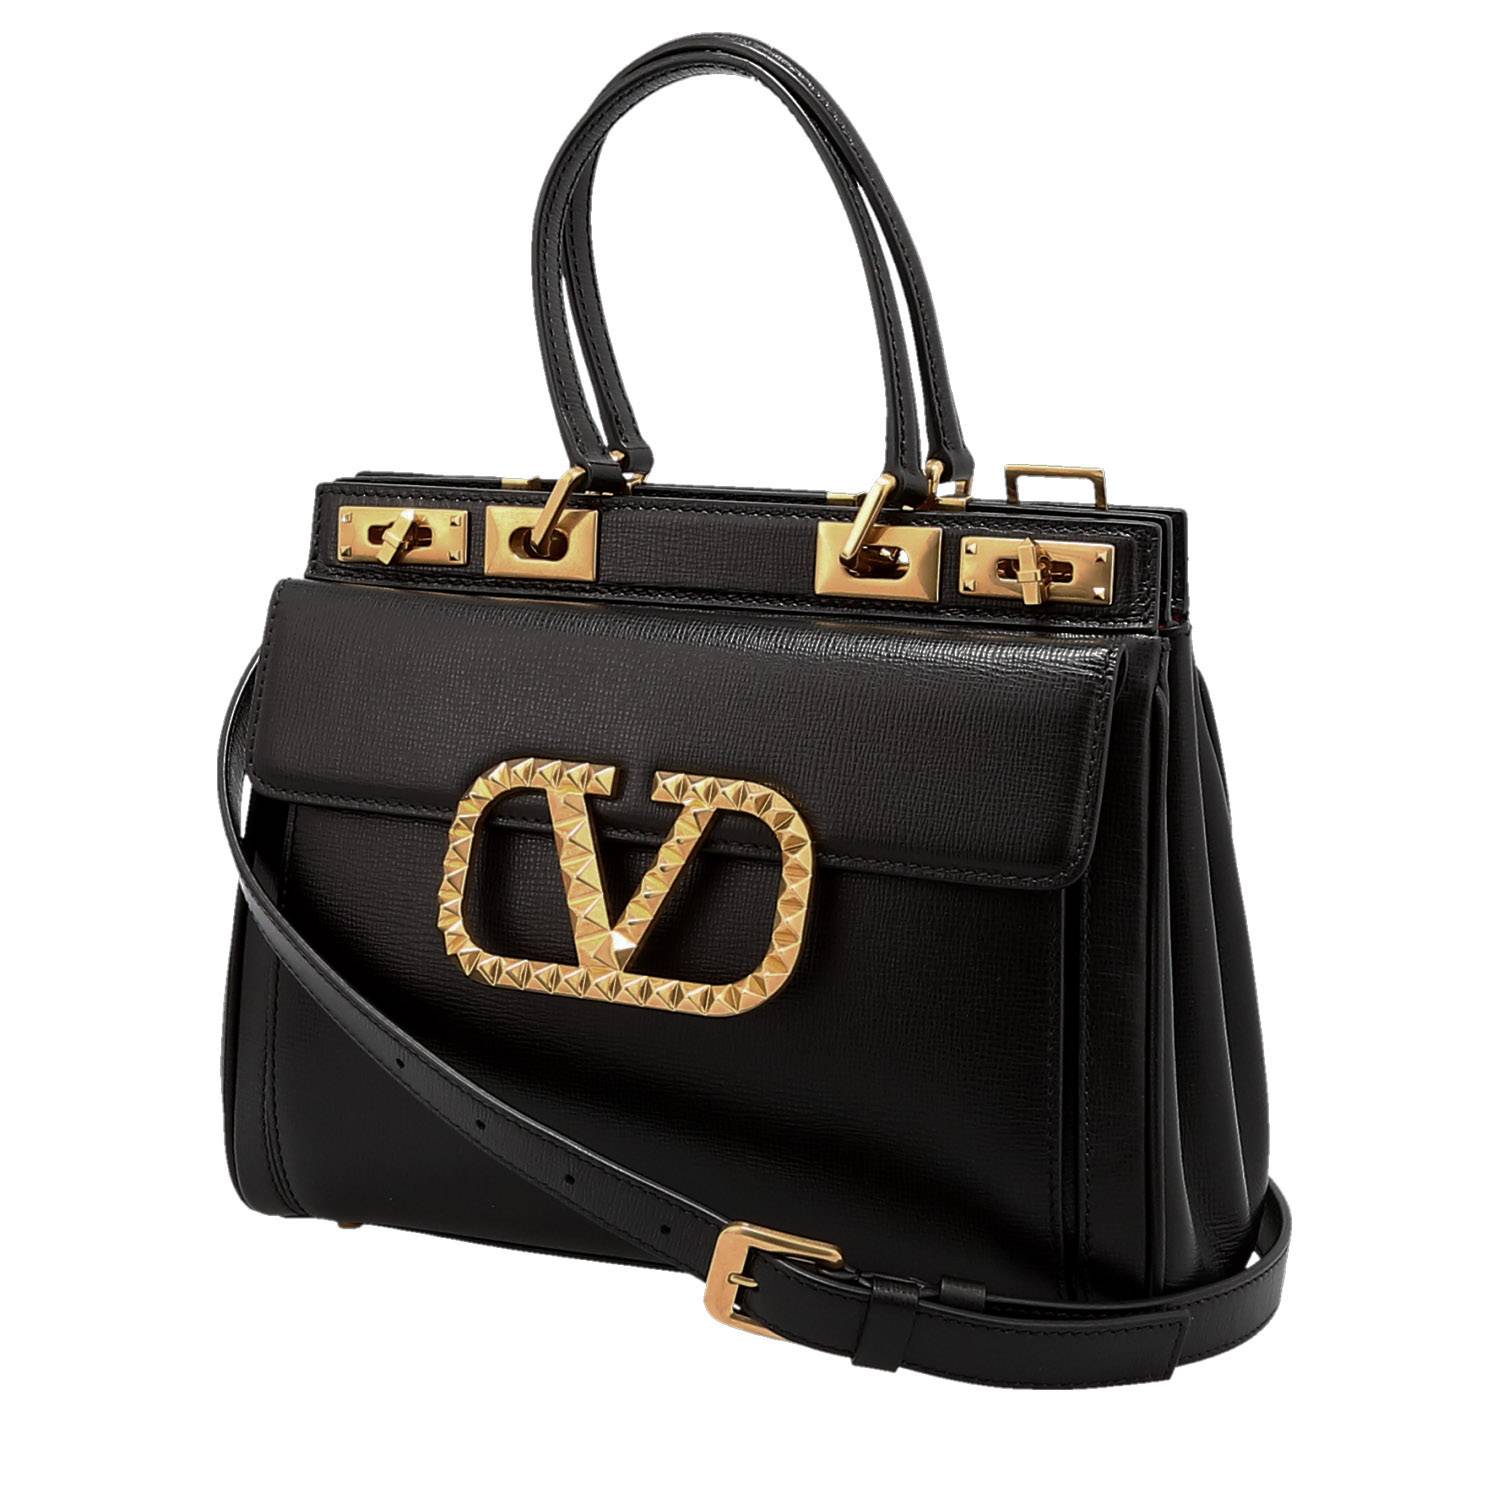 Valentino Garavani Rockstud Alcove handbag in black leather